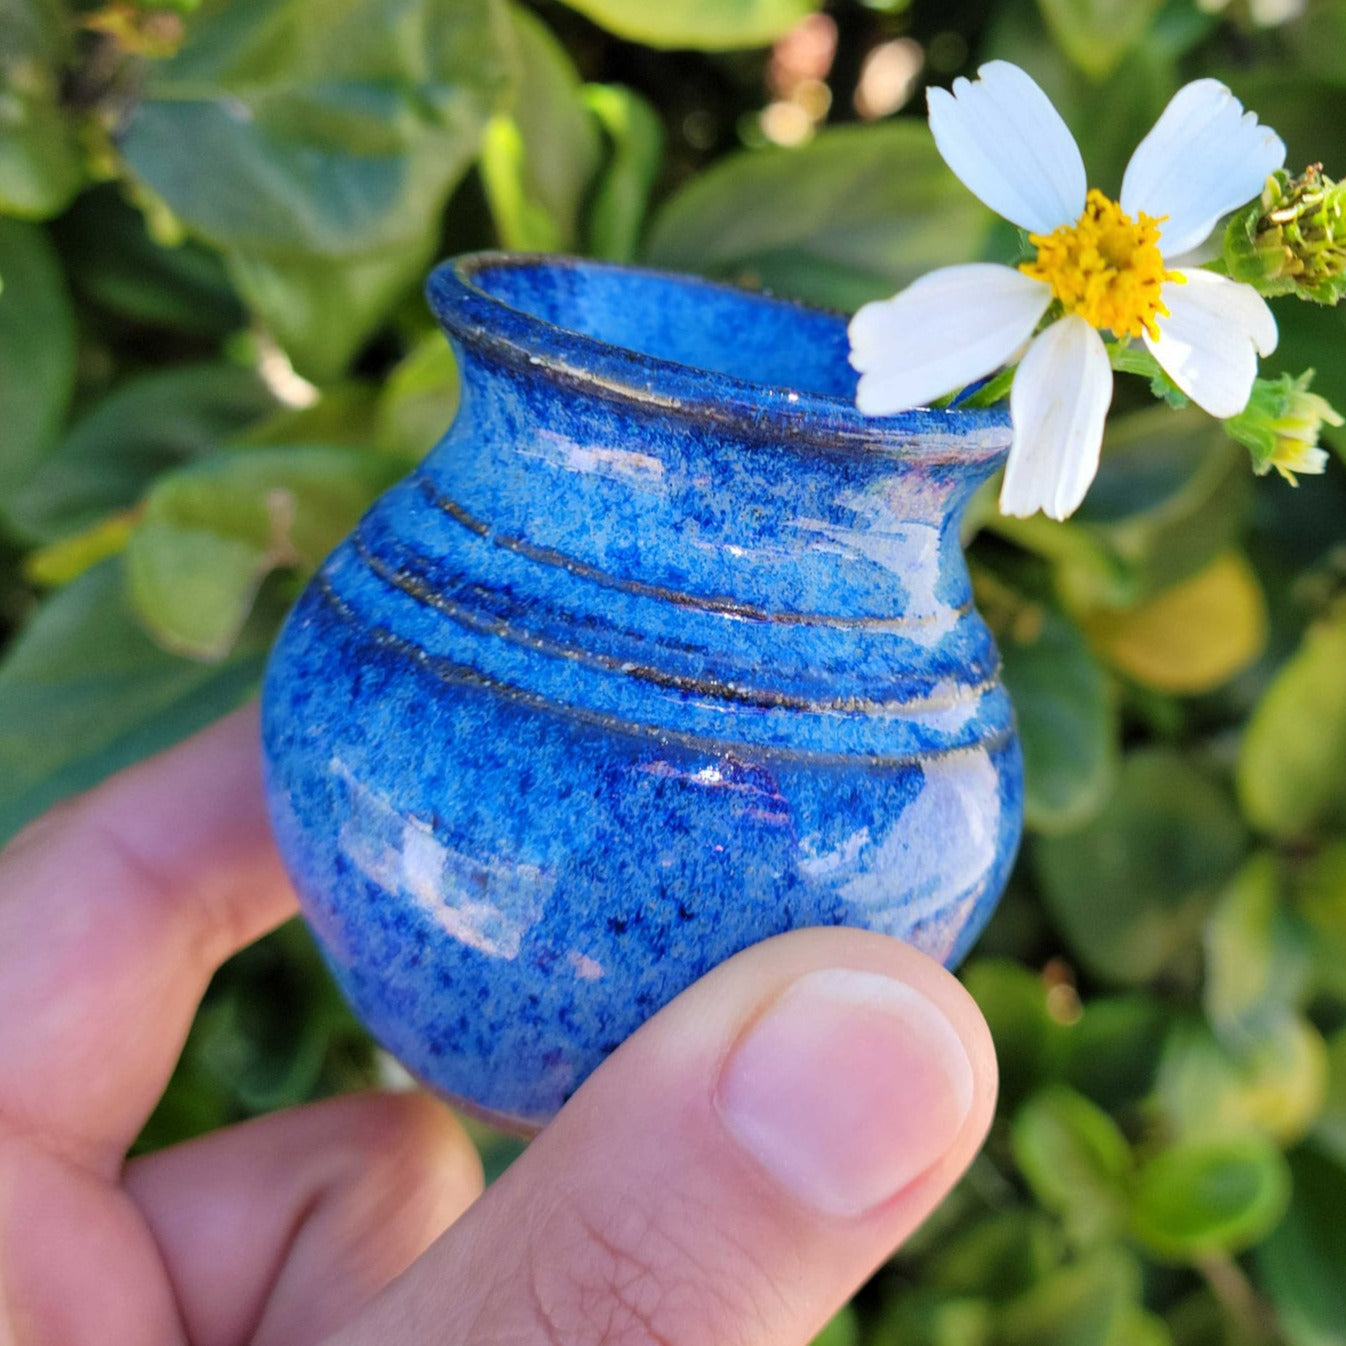 Miniature Pottery Vase - Keepsake Baby Shower Gift Mom To Be - Green